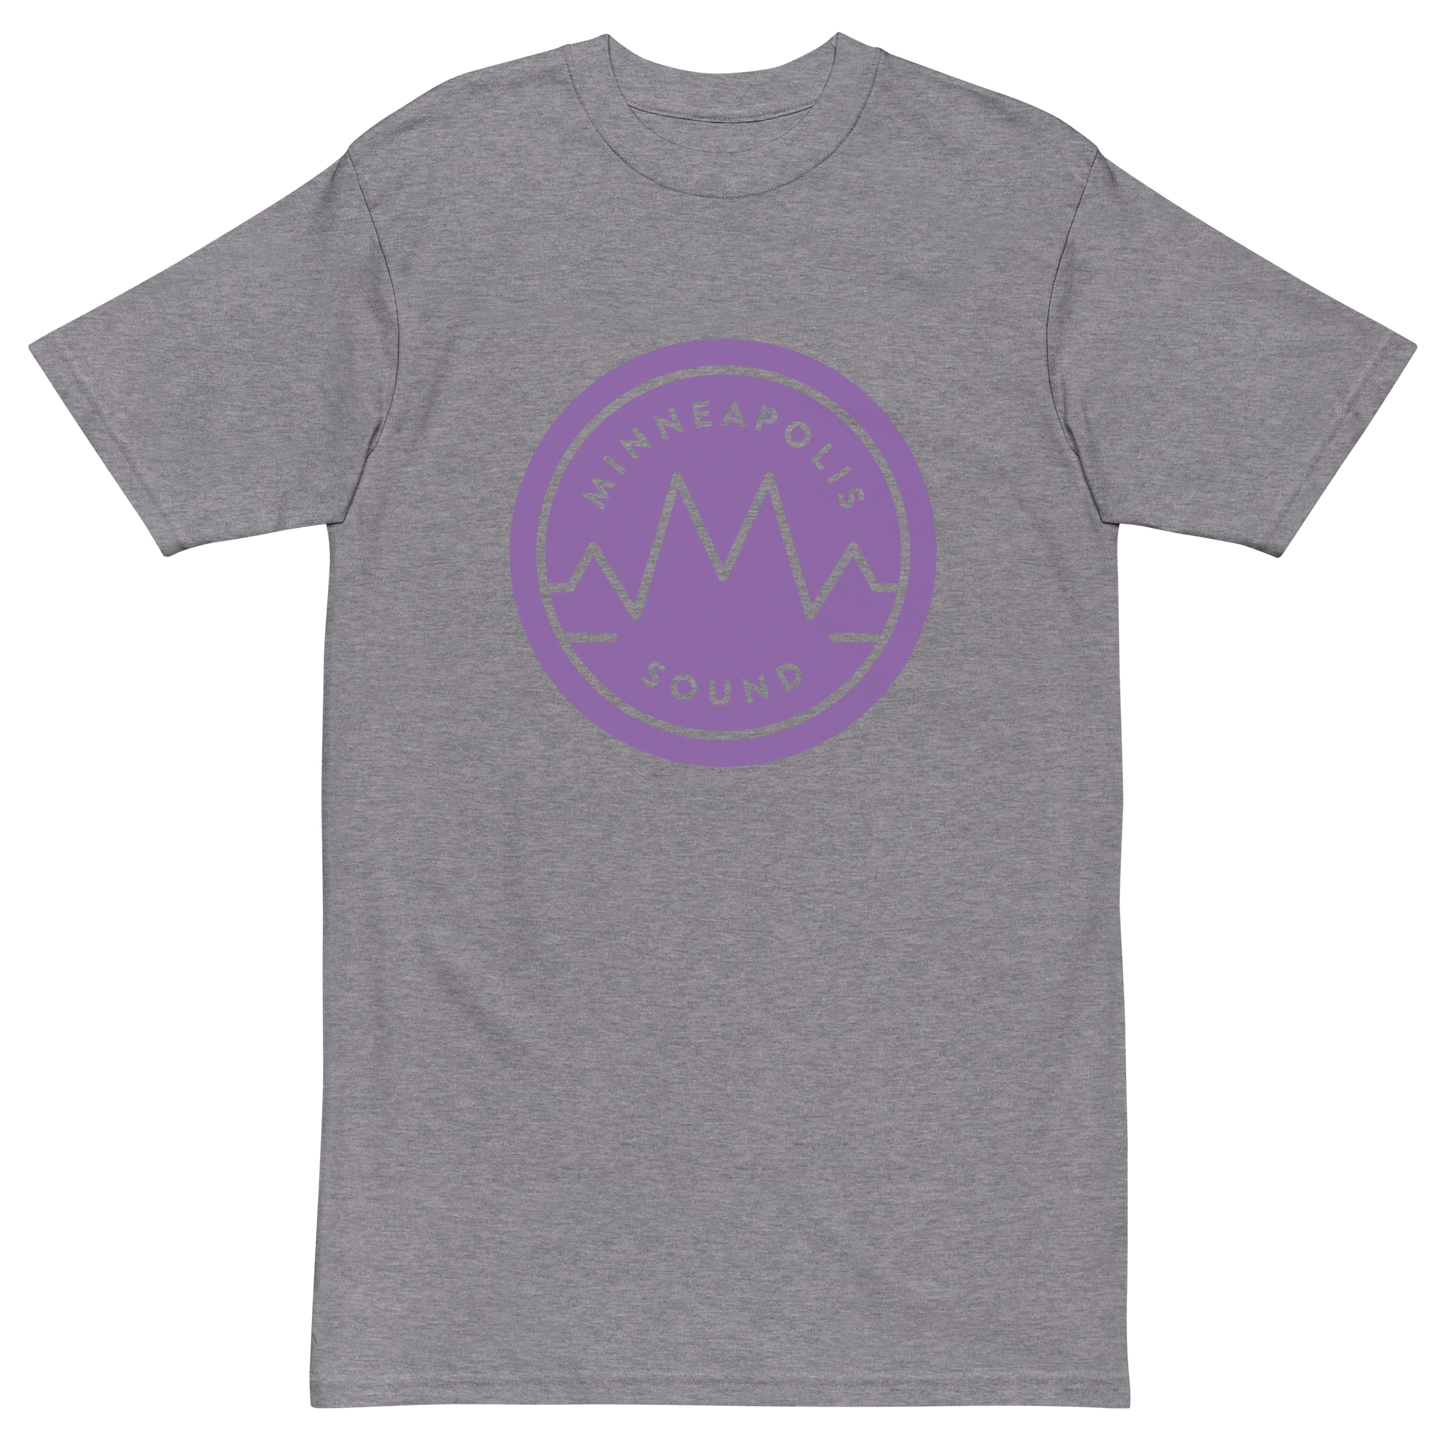 Minneapolis Sound Museum Logo T-Shirt